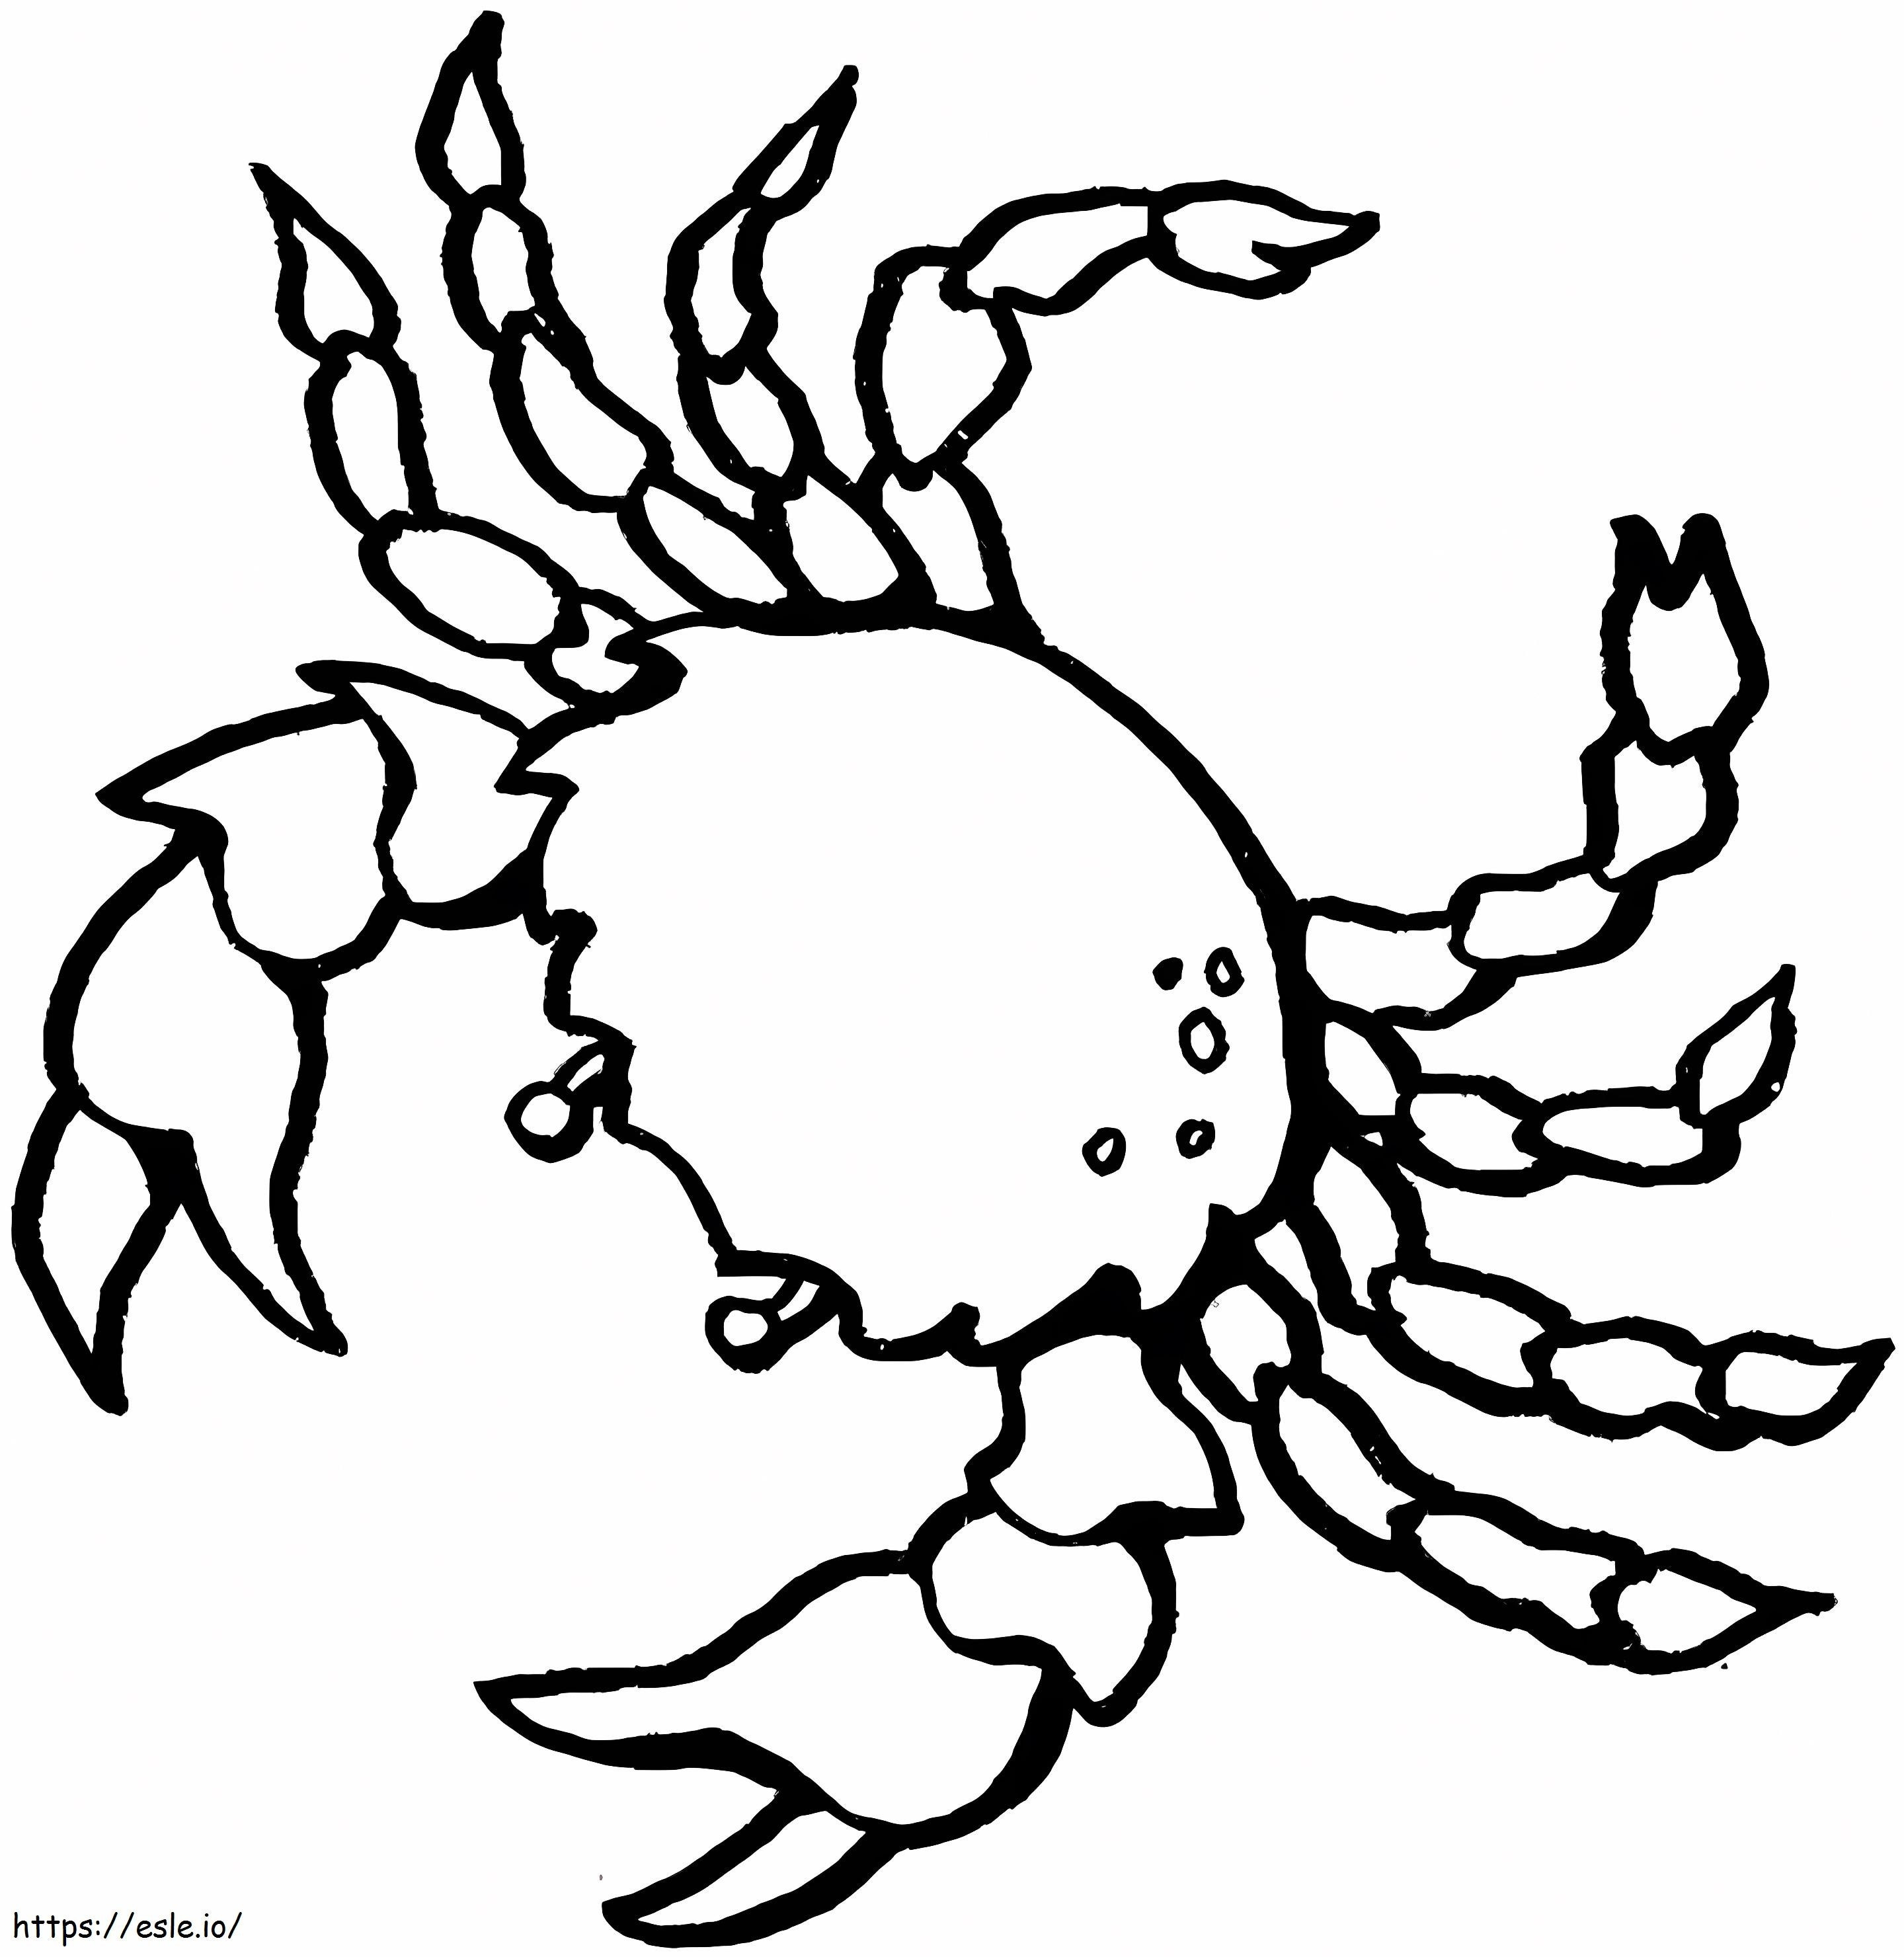 Prosty rysunek kraba kolorowanka